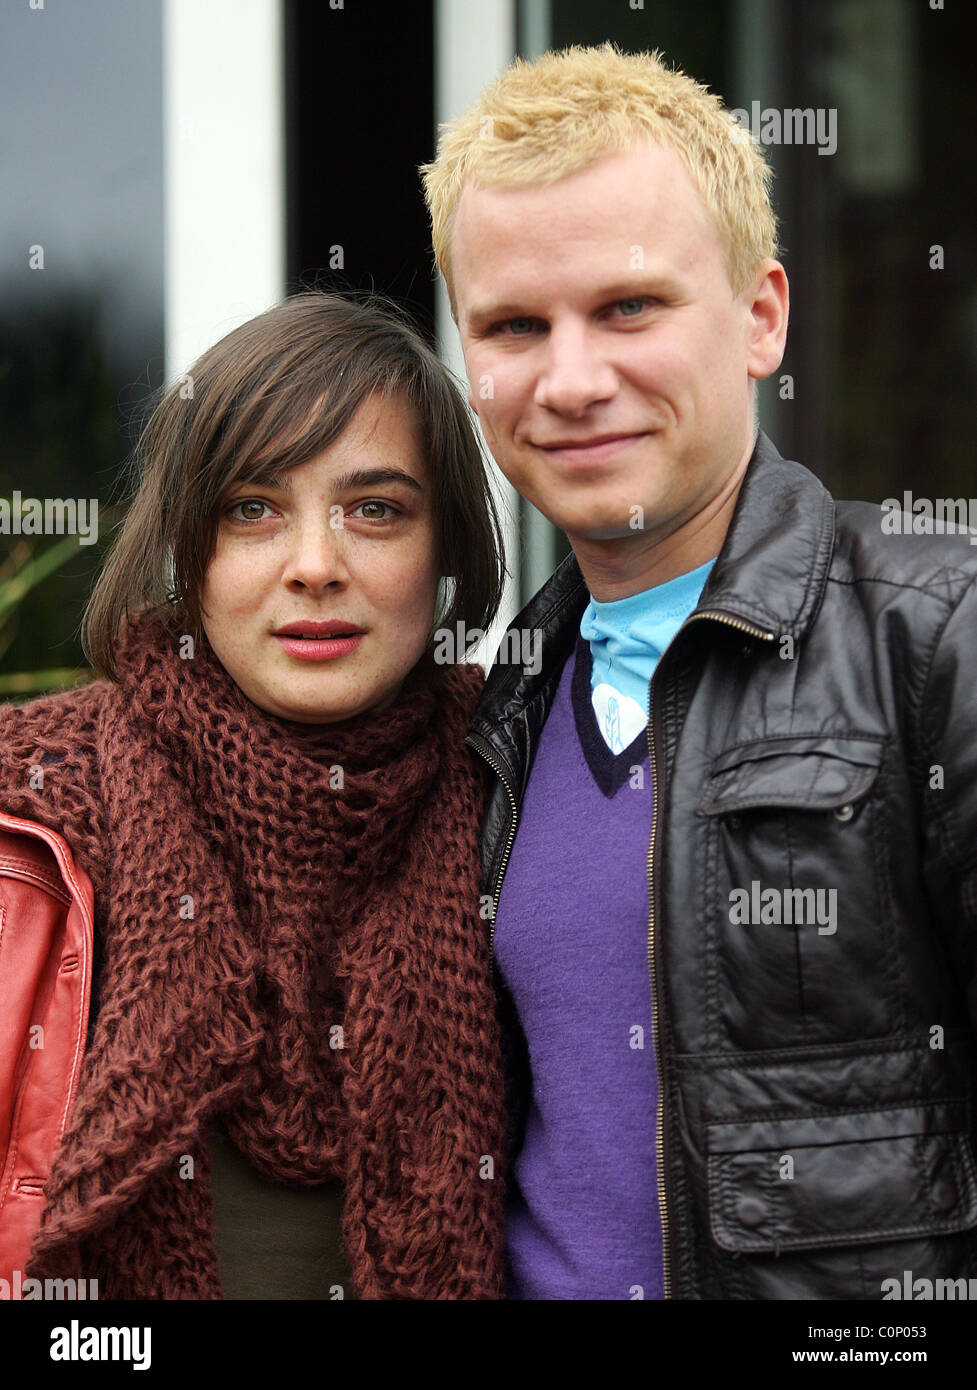 Maja Schoene, Robert Stadlober bei einem Fototermin für den Film "Zarte Parasiten" Köln - 15.10.08 Stockfoto